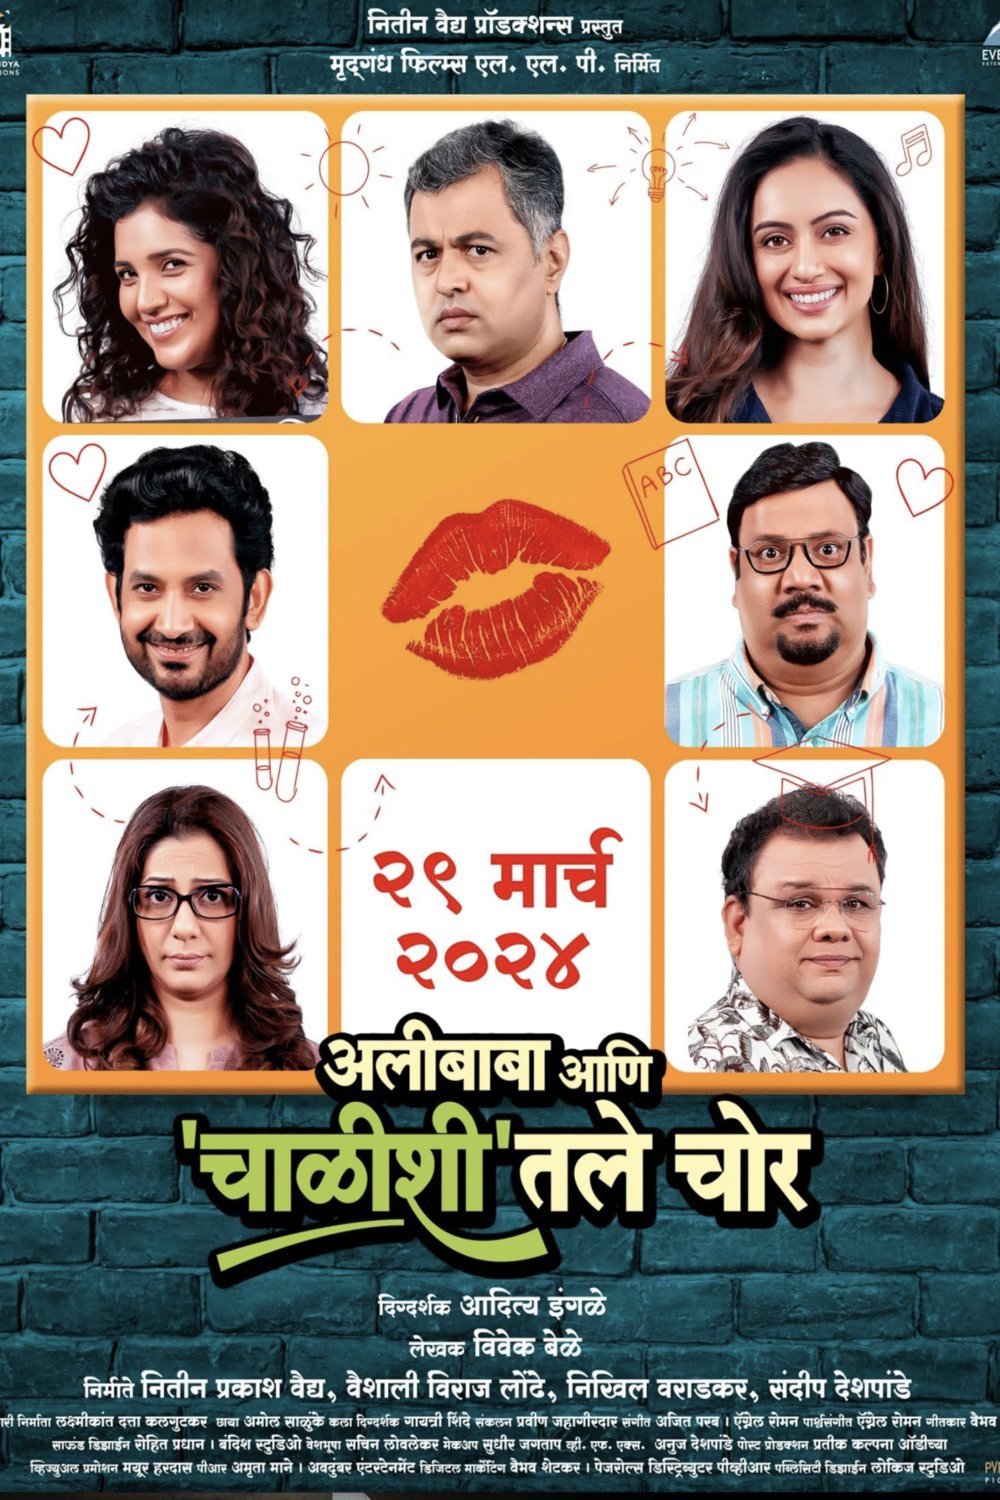 Marathi poster of the movie Alibaba Aani Chalishitale Chor